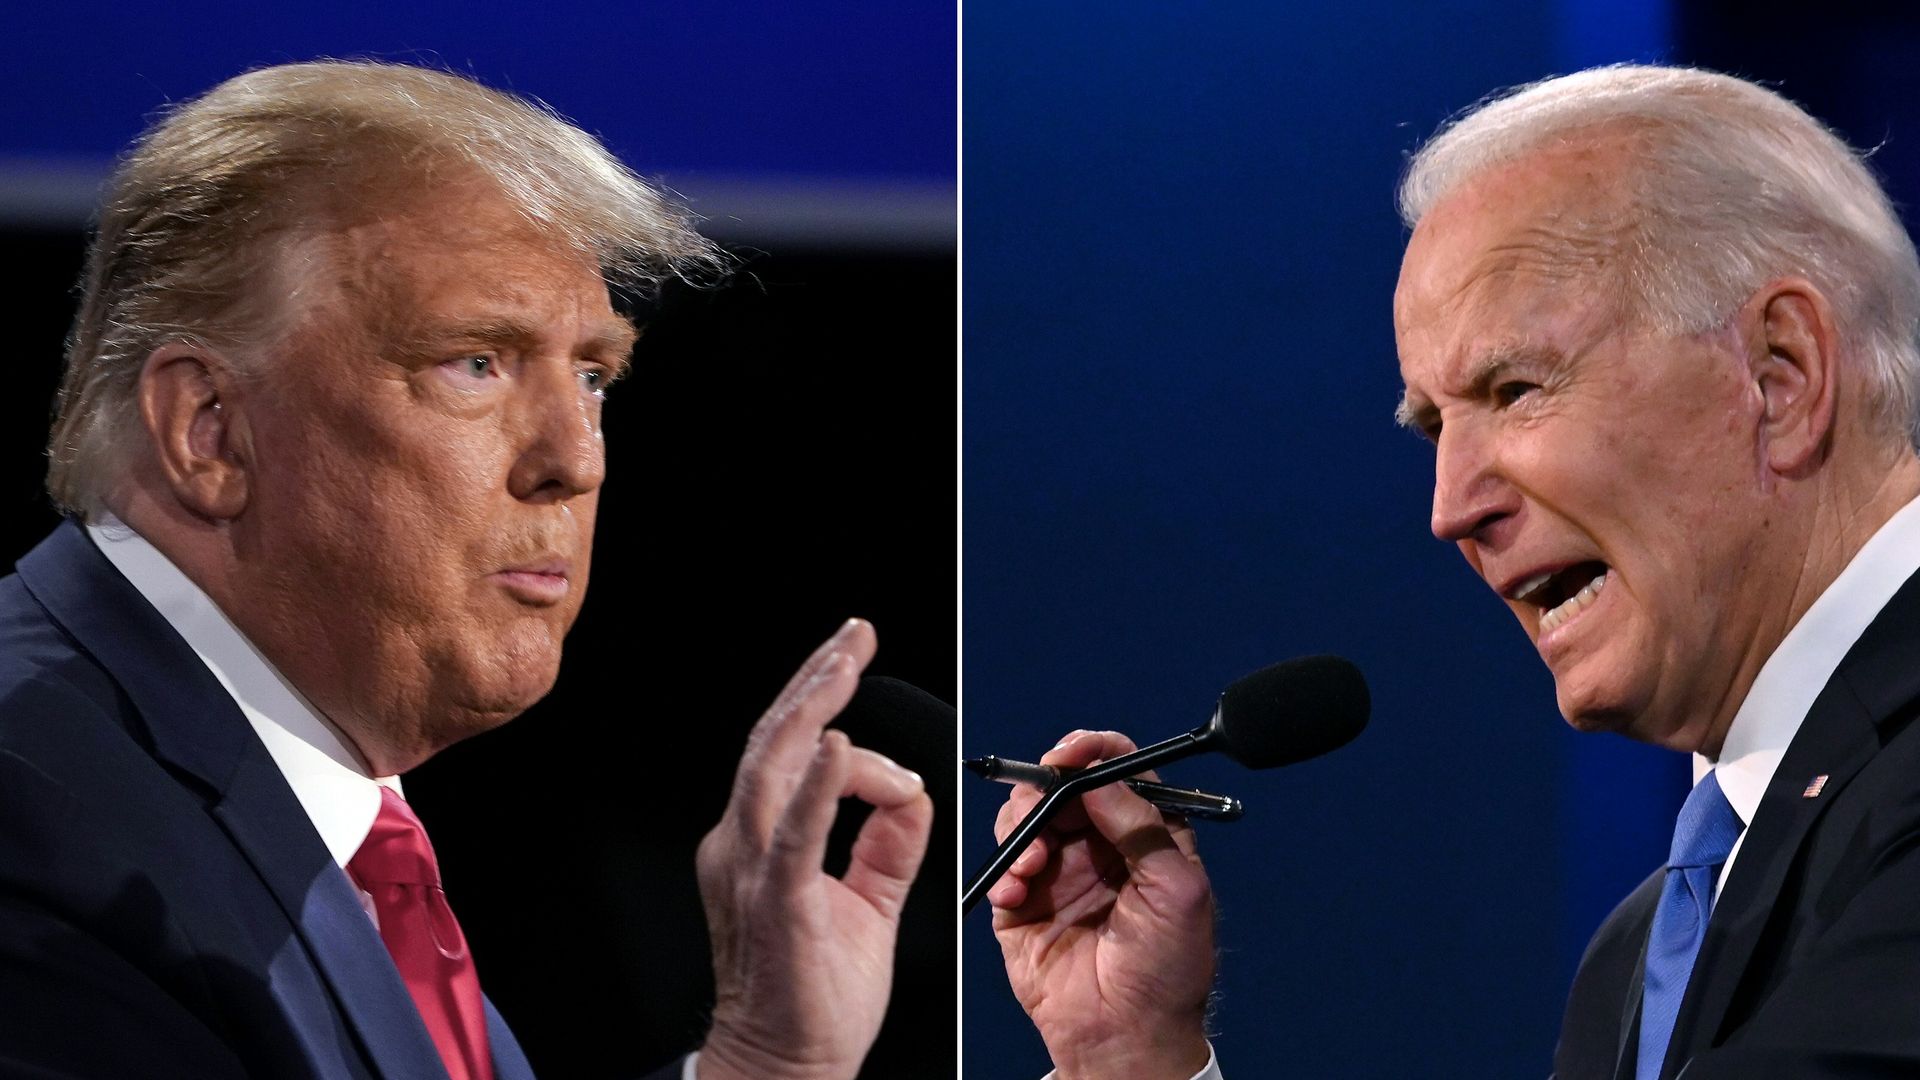 US President Donald Trump (L) and former US Vice President Joe Biden during a debate - Credit: BRENDAN SMIALOWSKI, JIM WATSON/AFP via Getty Images